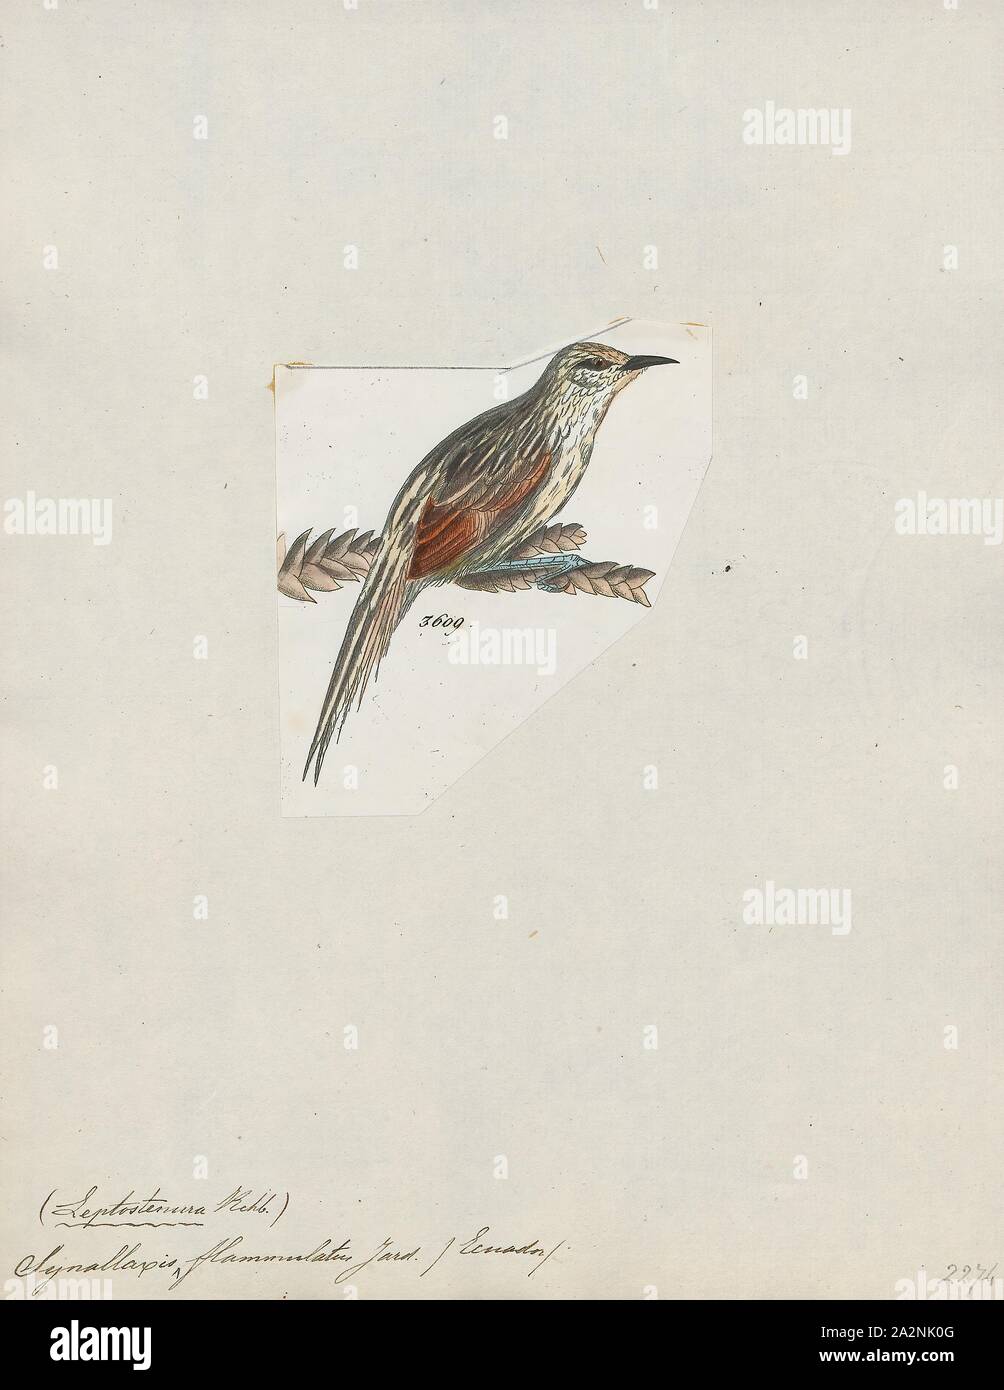 Synallaxis flammulata, Print, Synallaxis is a genus of birds in the ovenbird family, Furnariidae., 1820-1860 Stock Photo